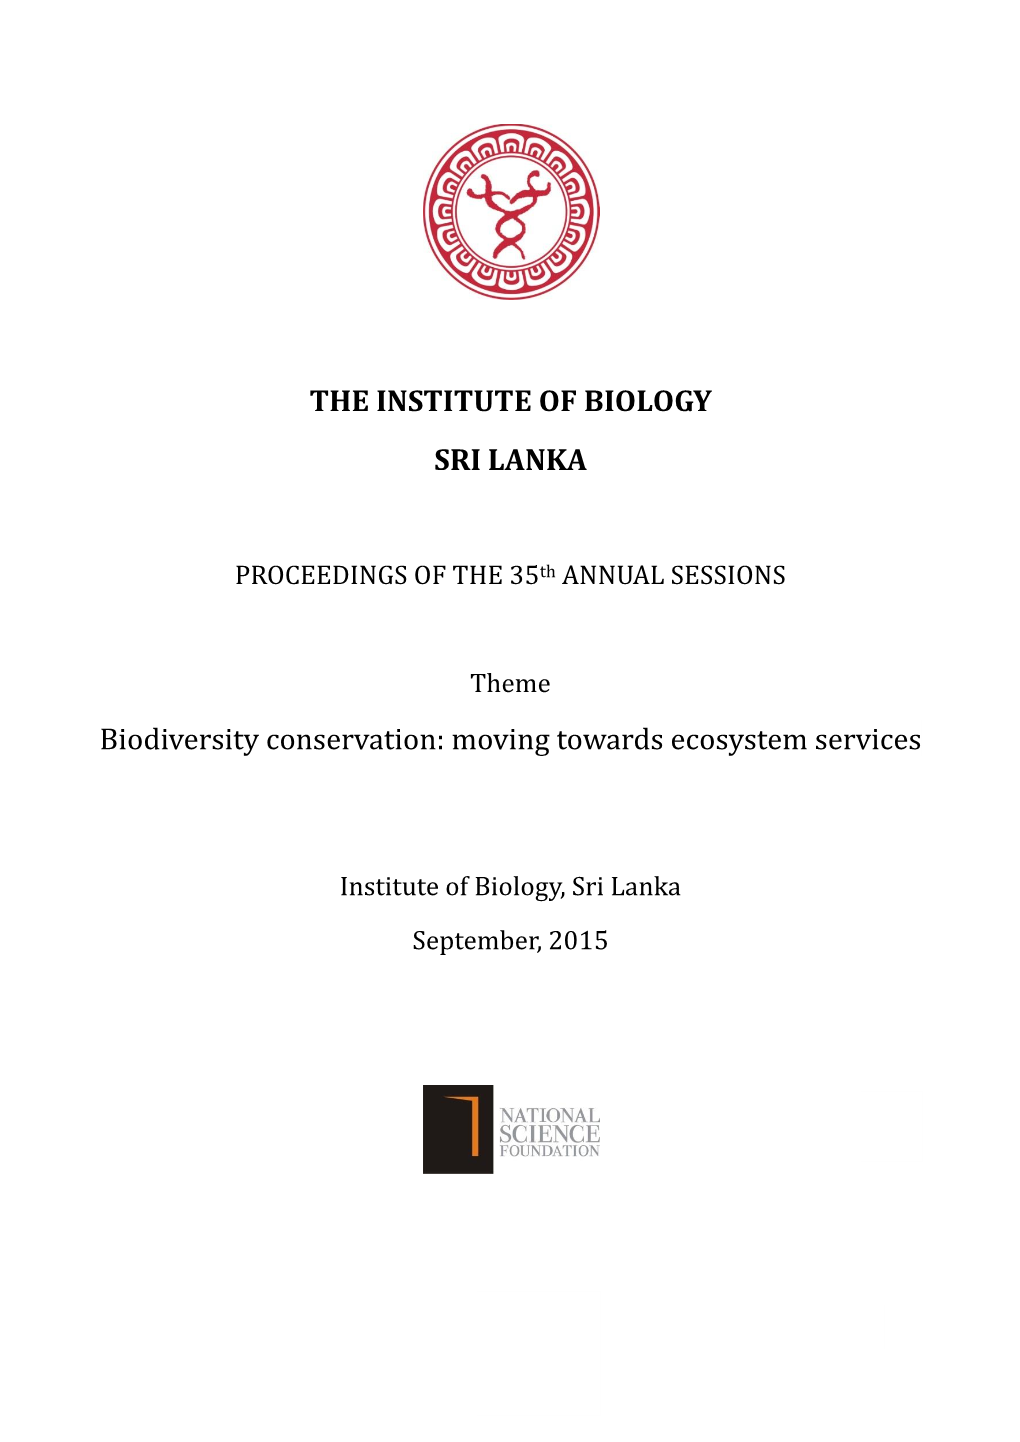 IOB Proceedings 2015